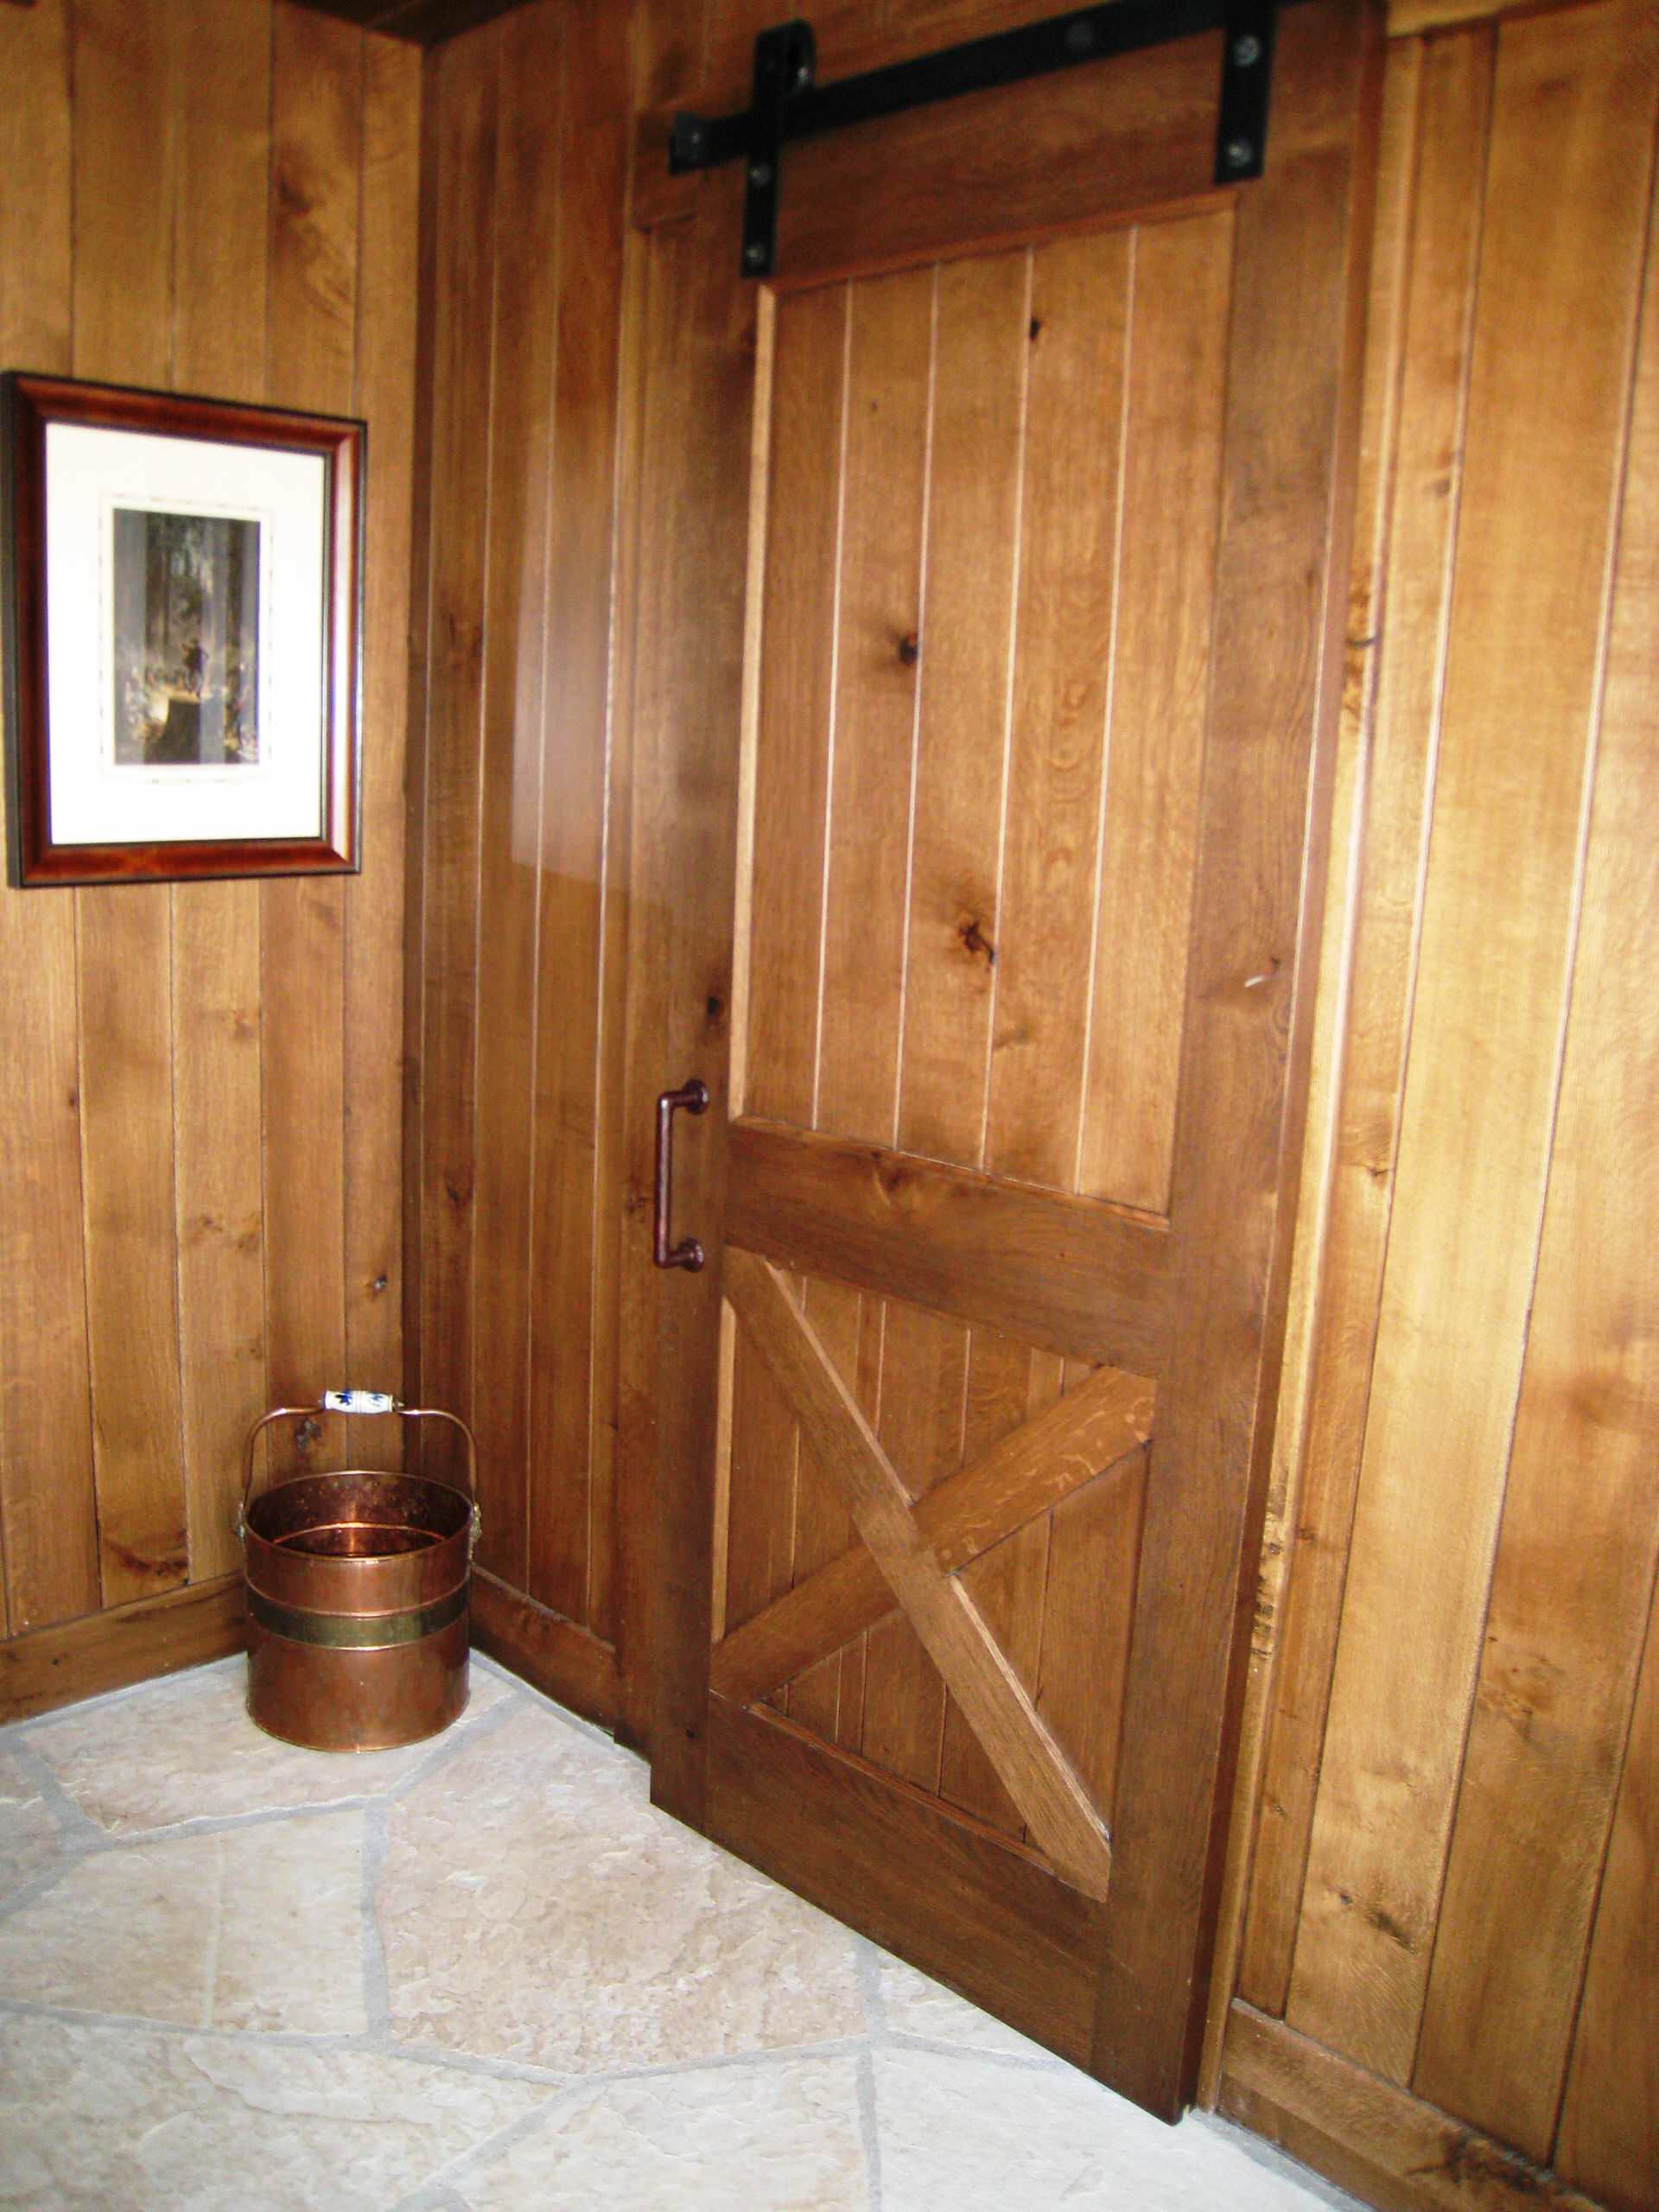 Barn door on sliding hardware